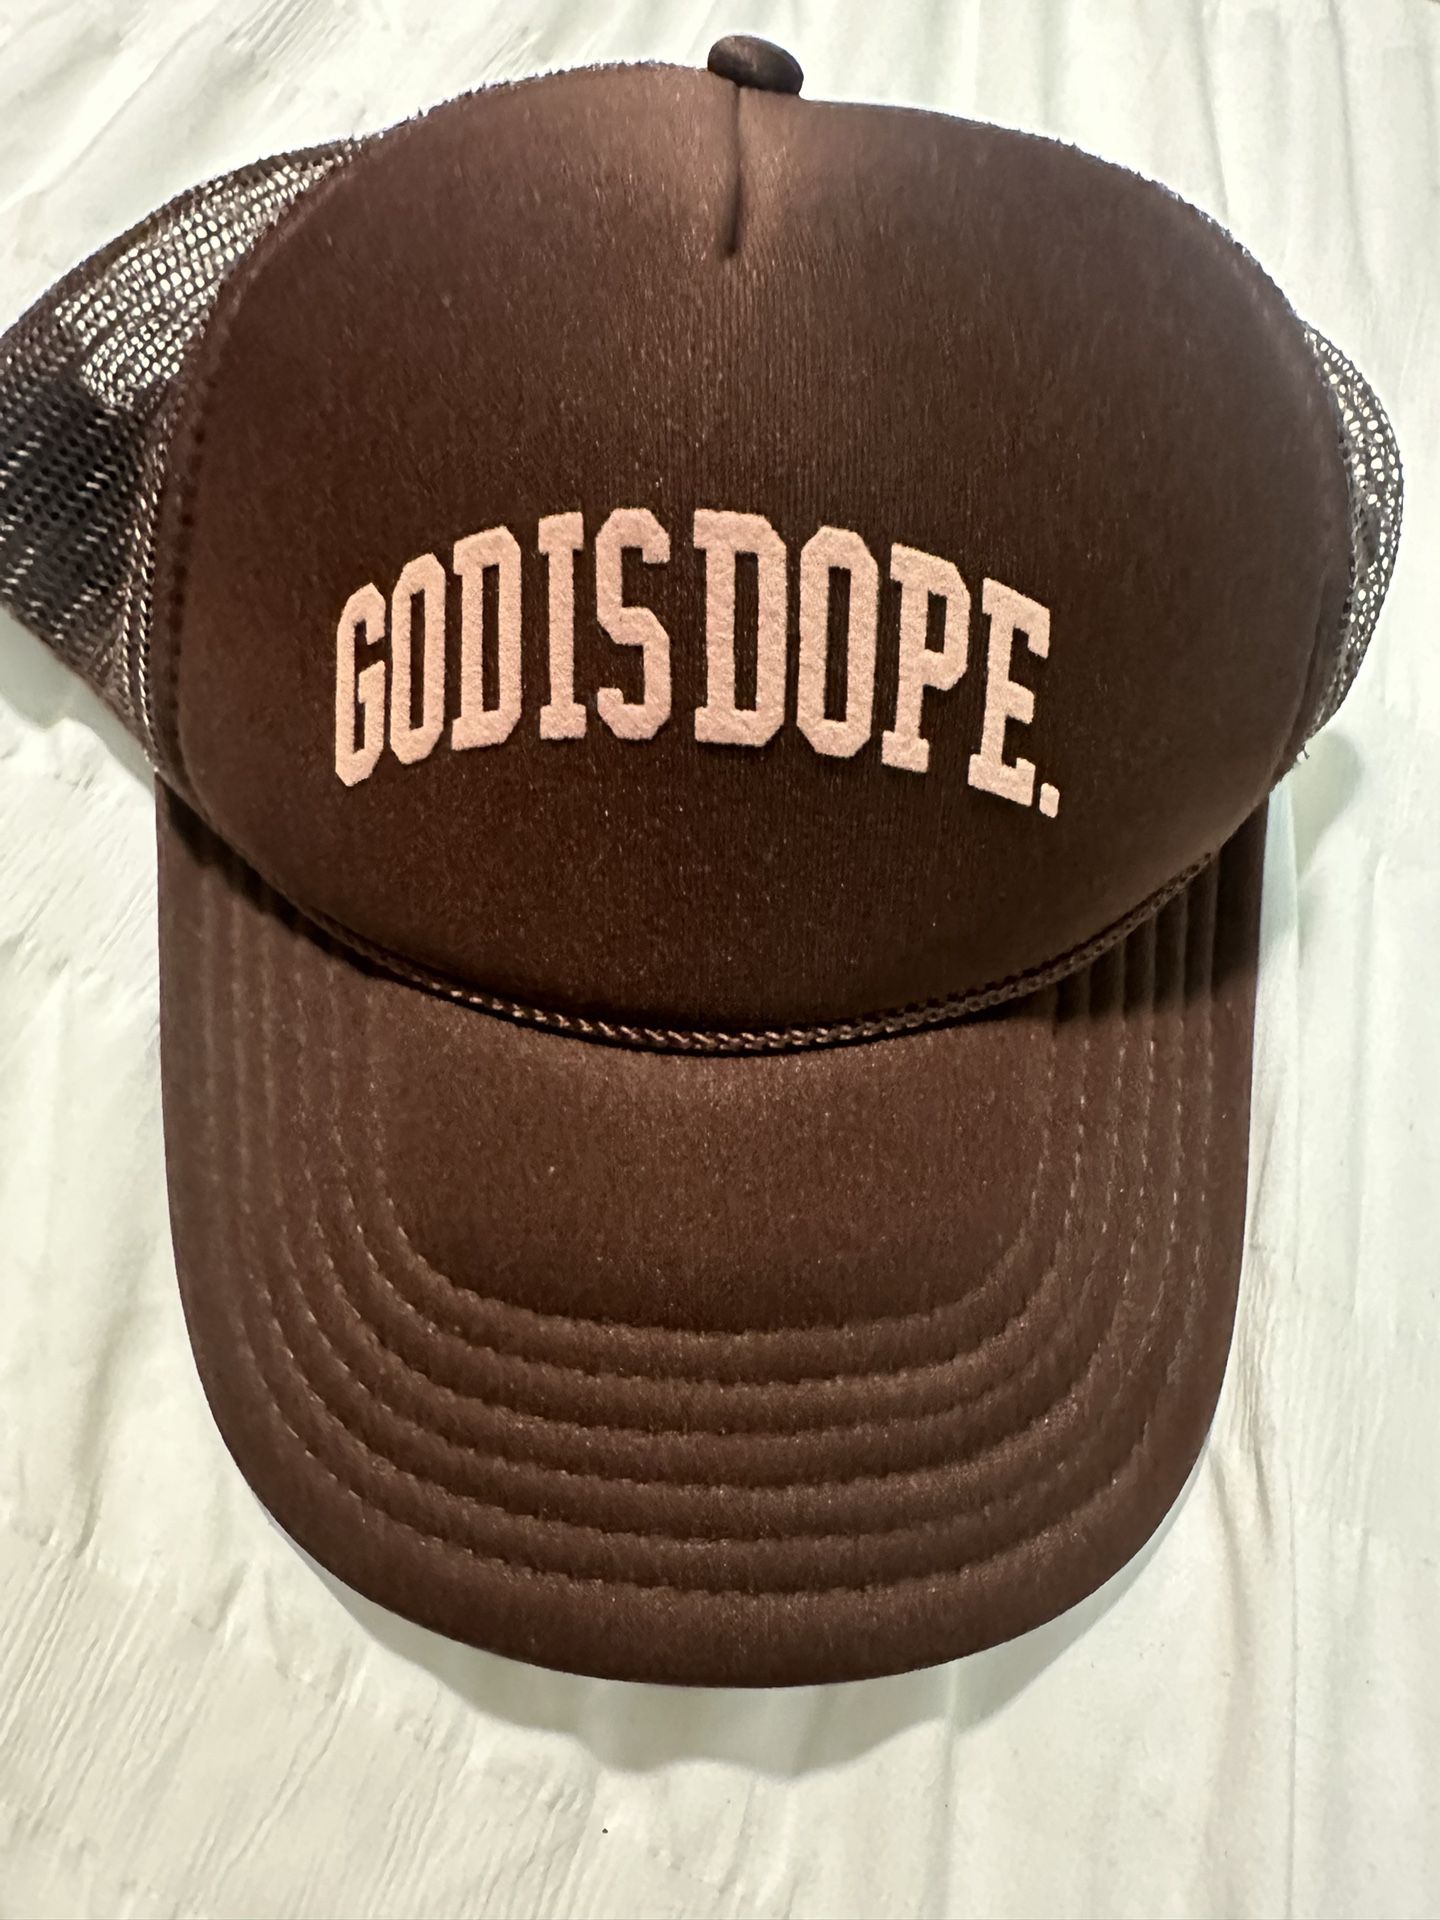 FLASH SALE $8 - BRAND NEW “God Is Dope” Brown/Pink Trucker Hat